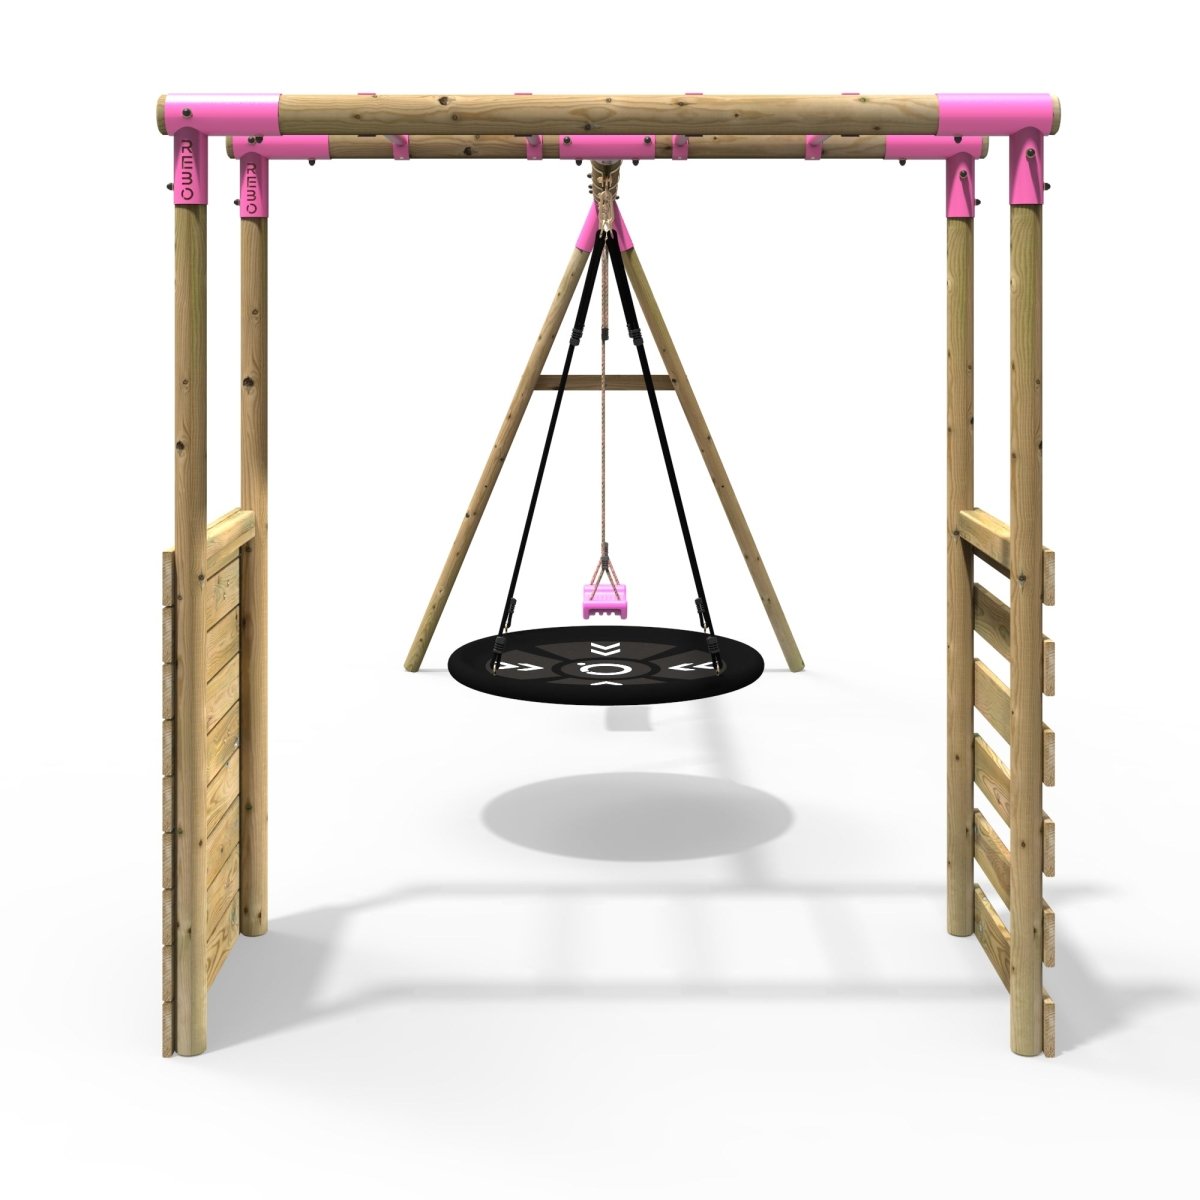 Rebo Wooden Garden Swing Set with Monkey Bars - Meteorite Pink